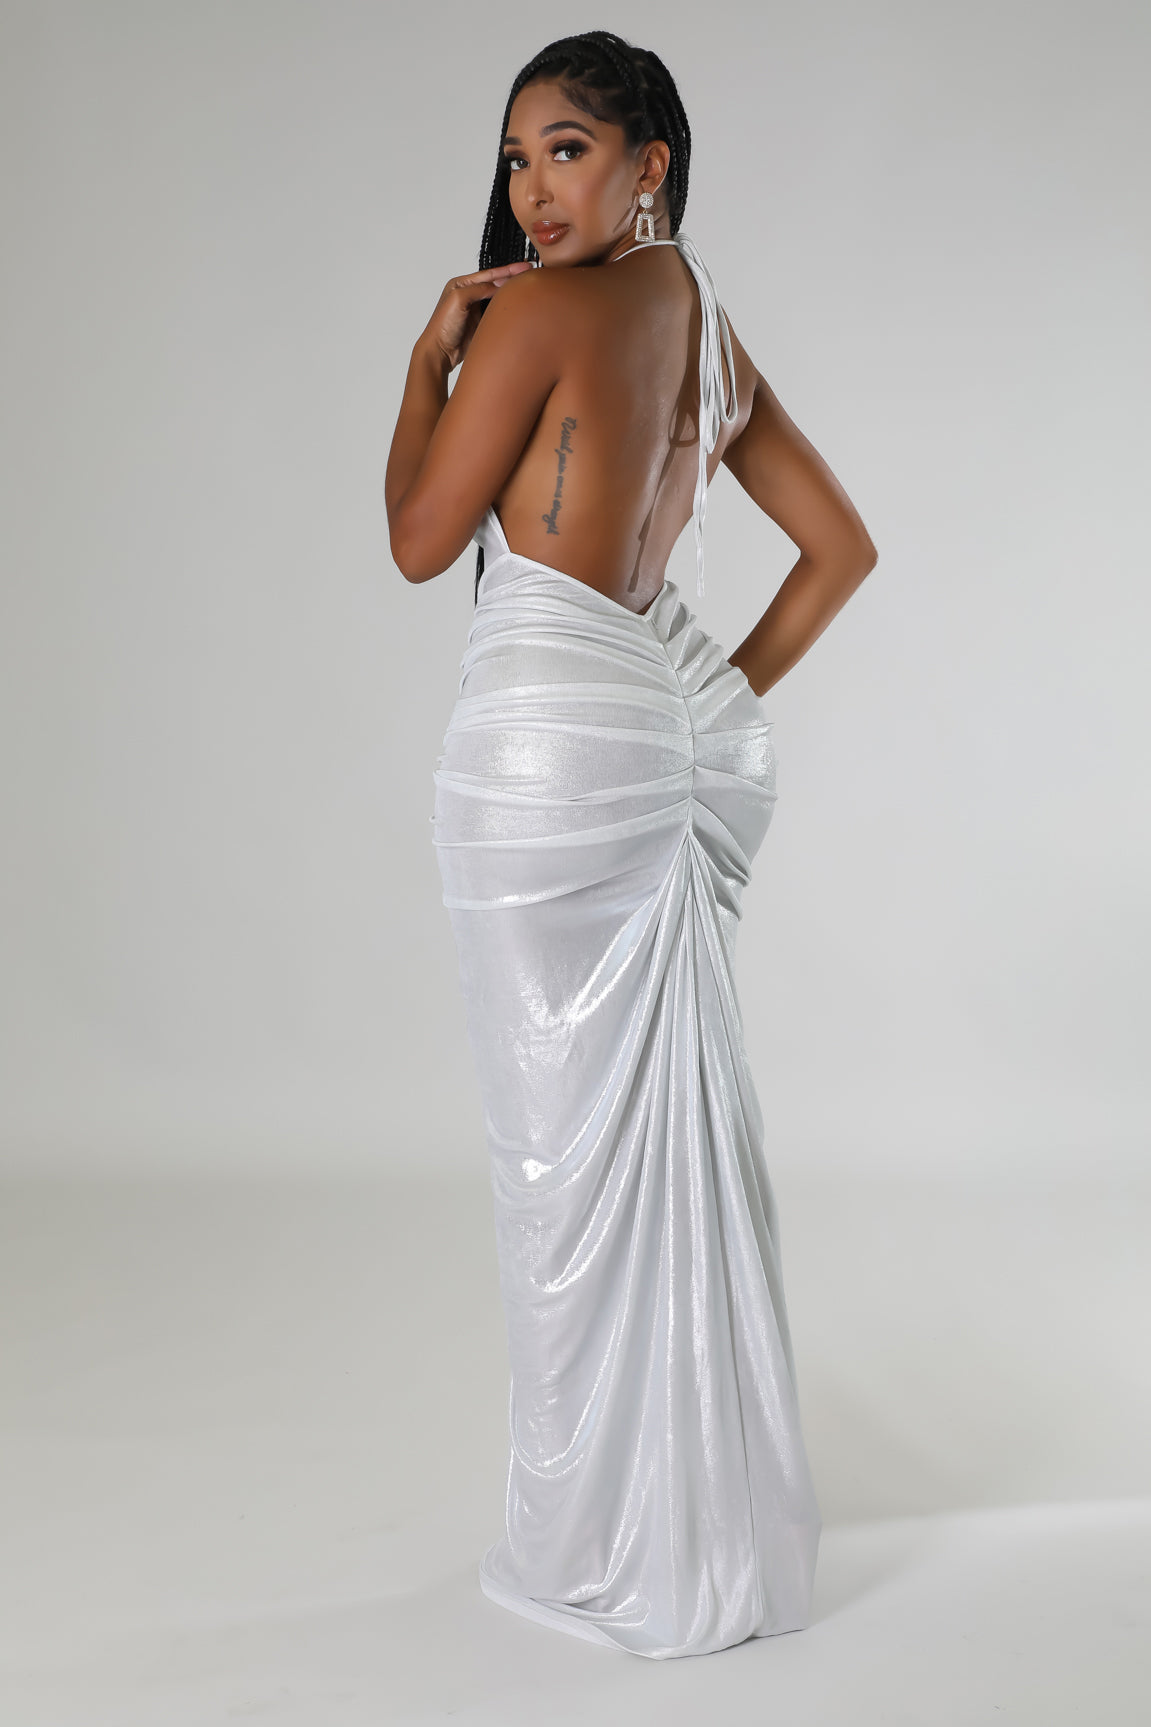 Venus Dress | Venus dresses, Prom dress inspiration, Event dresses